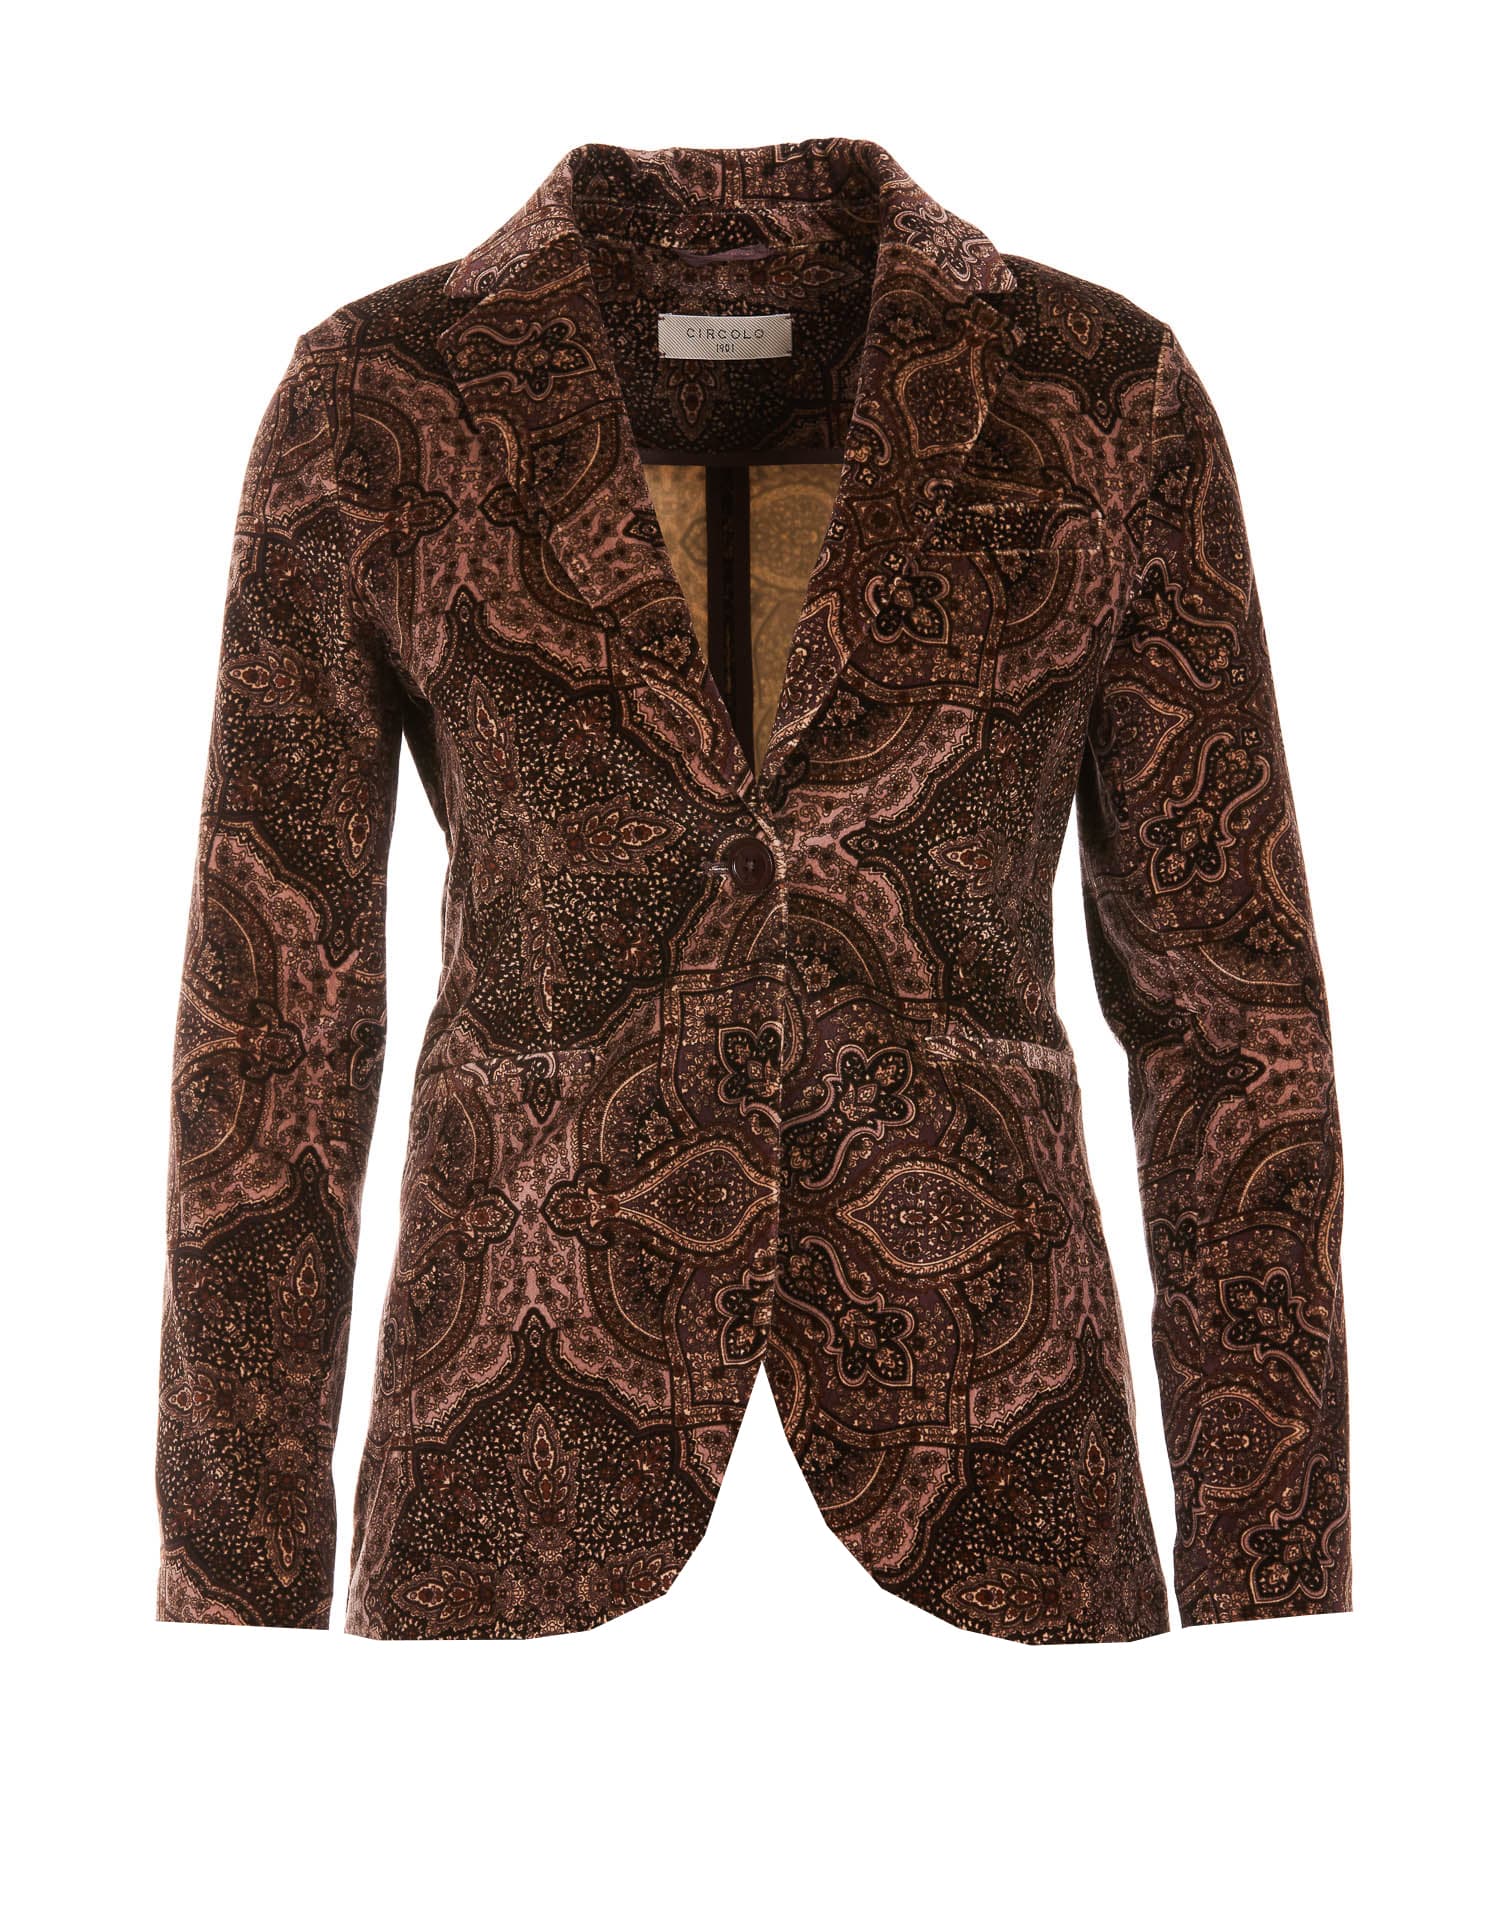 Circolo 1901 Velvet Jacket